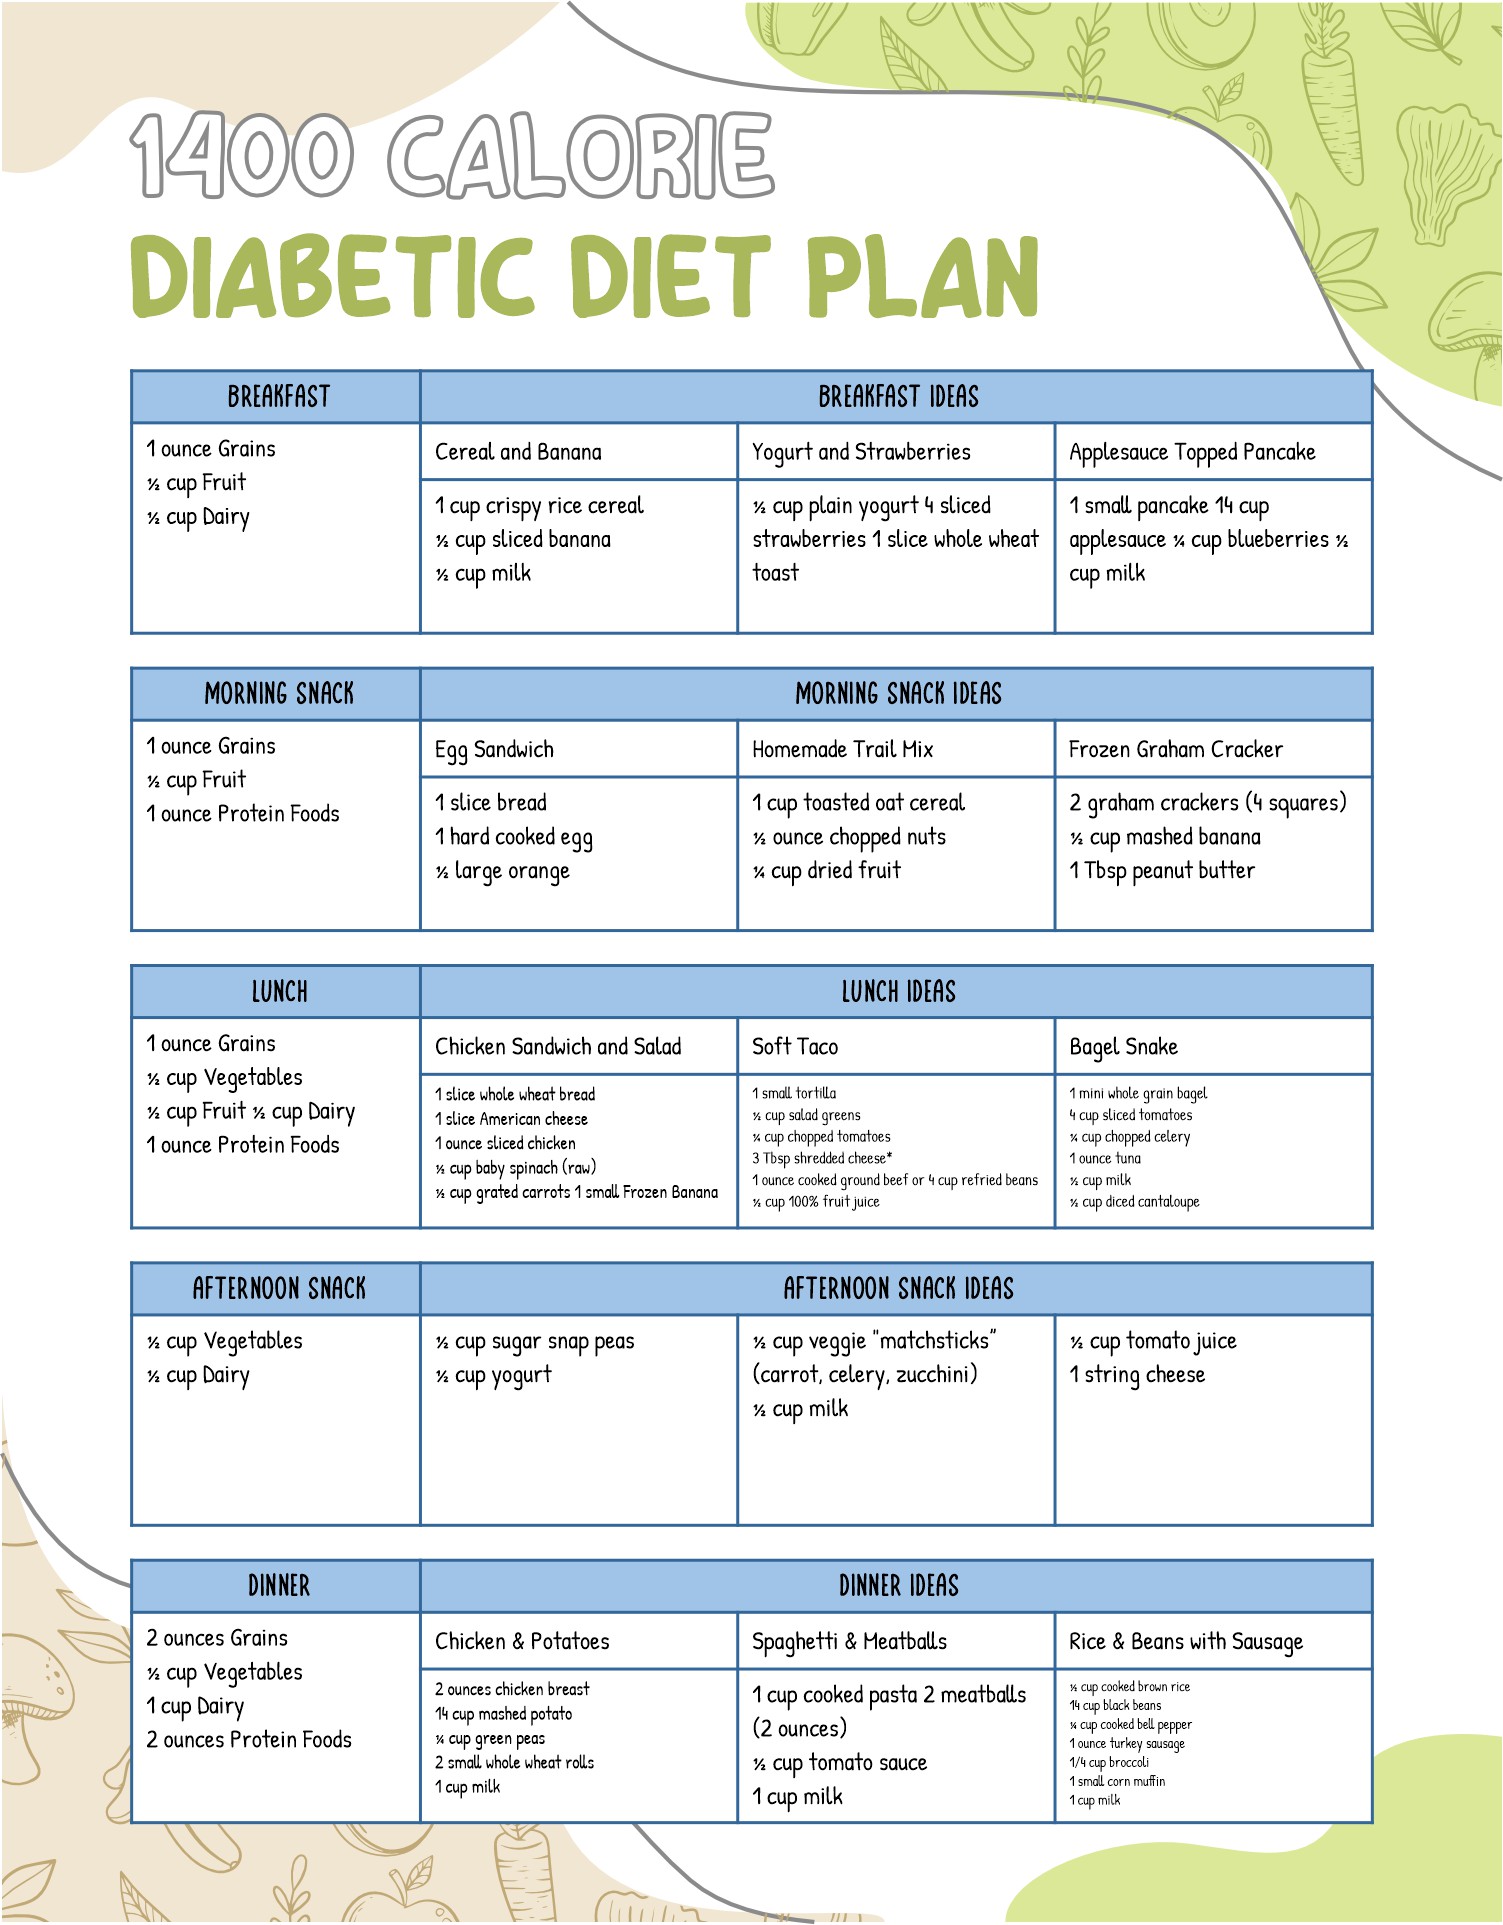 1400 Calorie Diabetic Diet Meal Plan